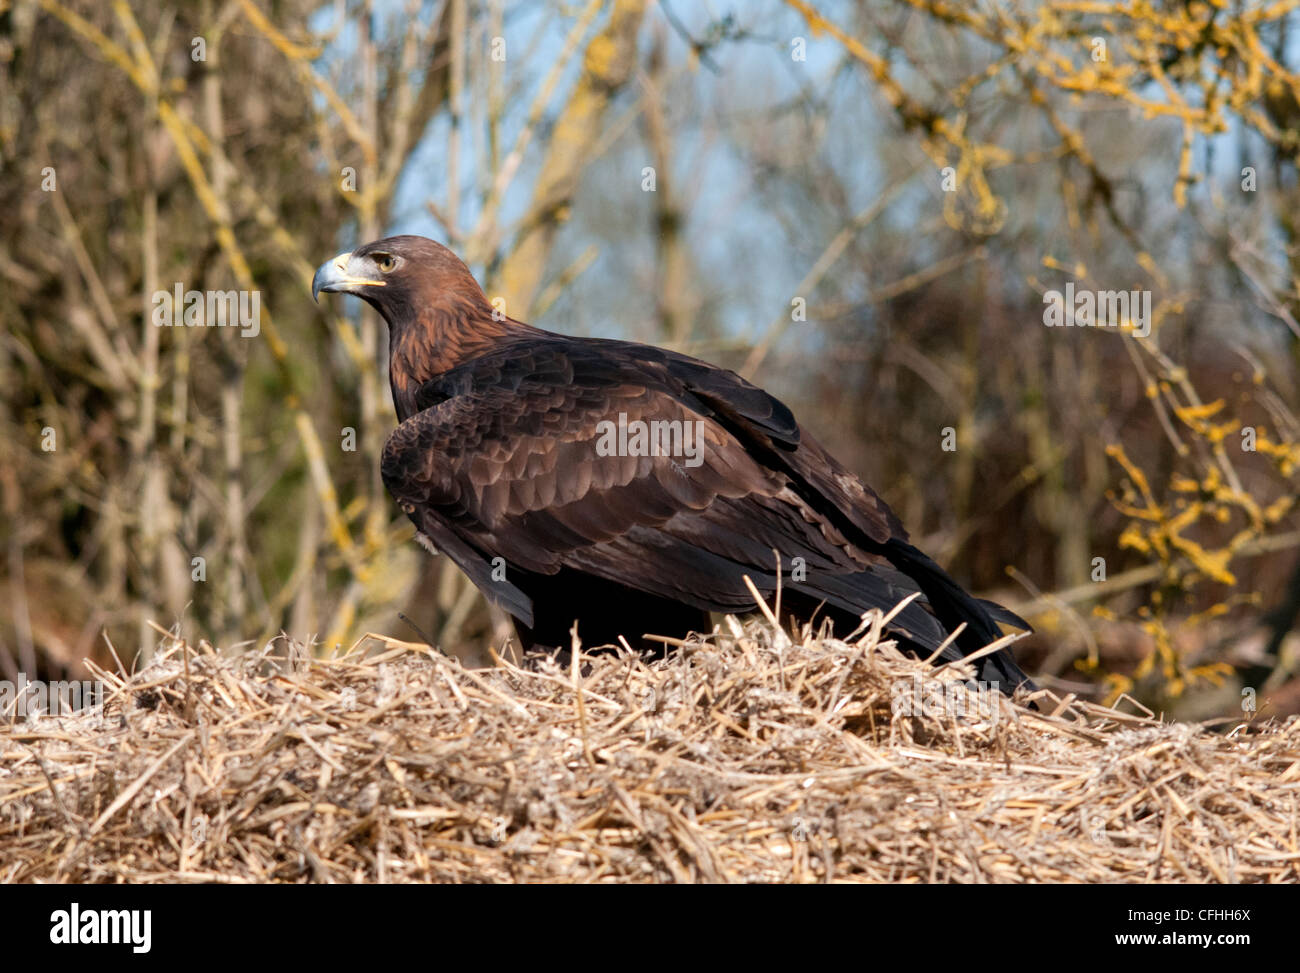 Golden Eagle de pie sobre un fardo de heno Foto de stock